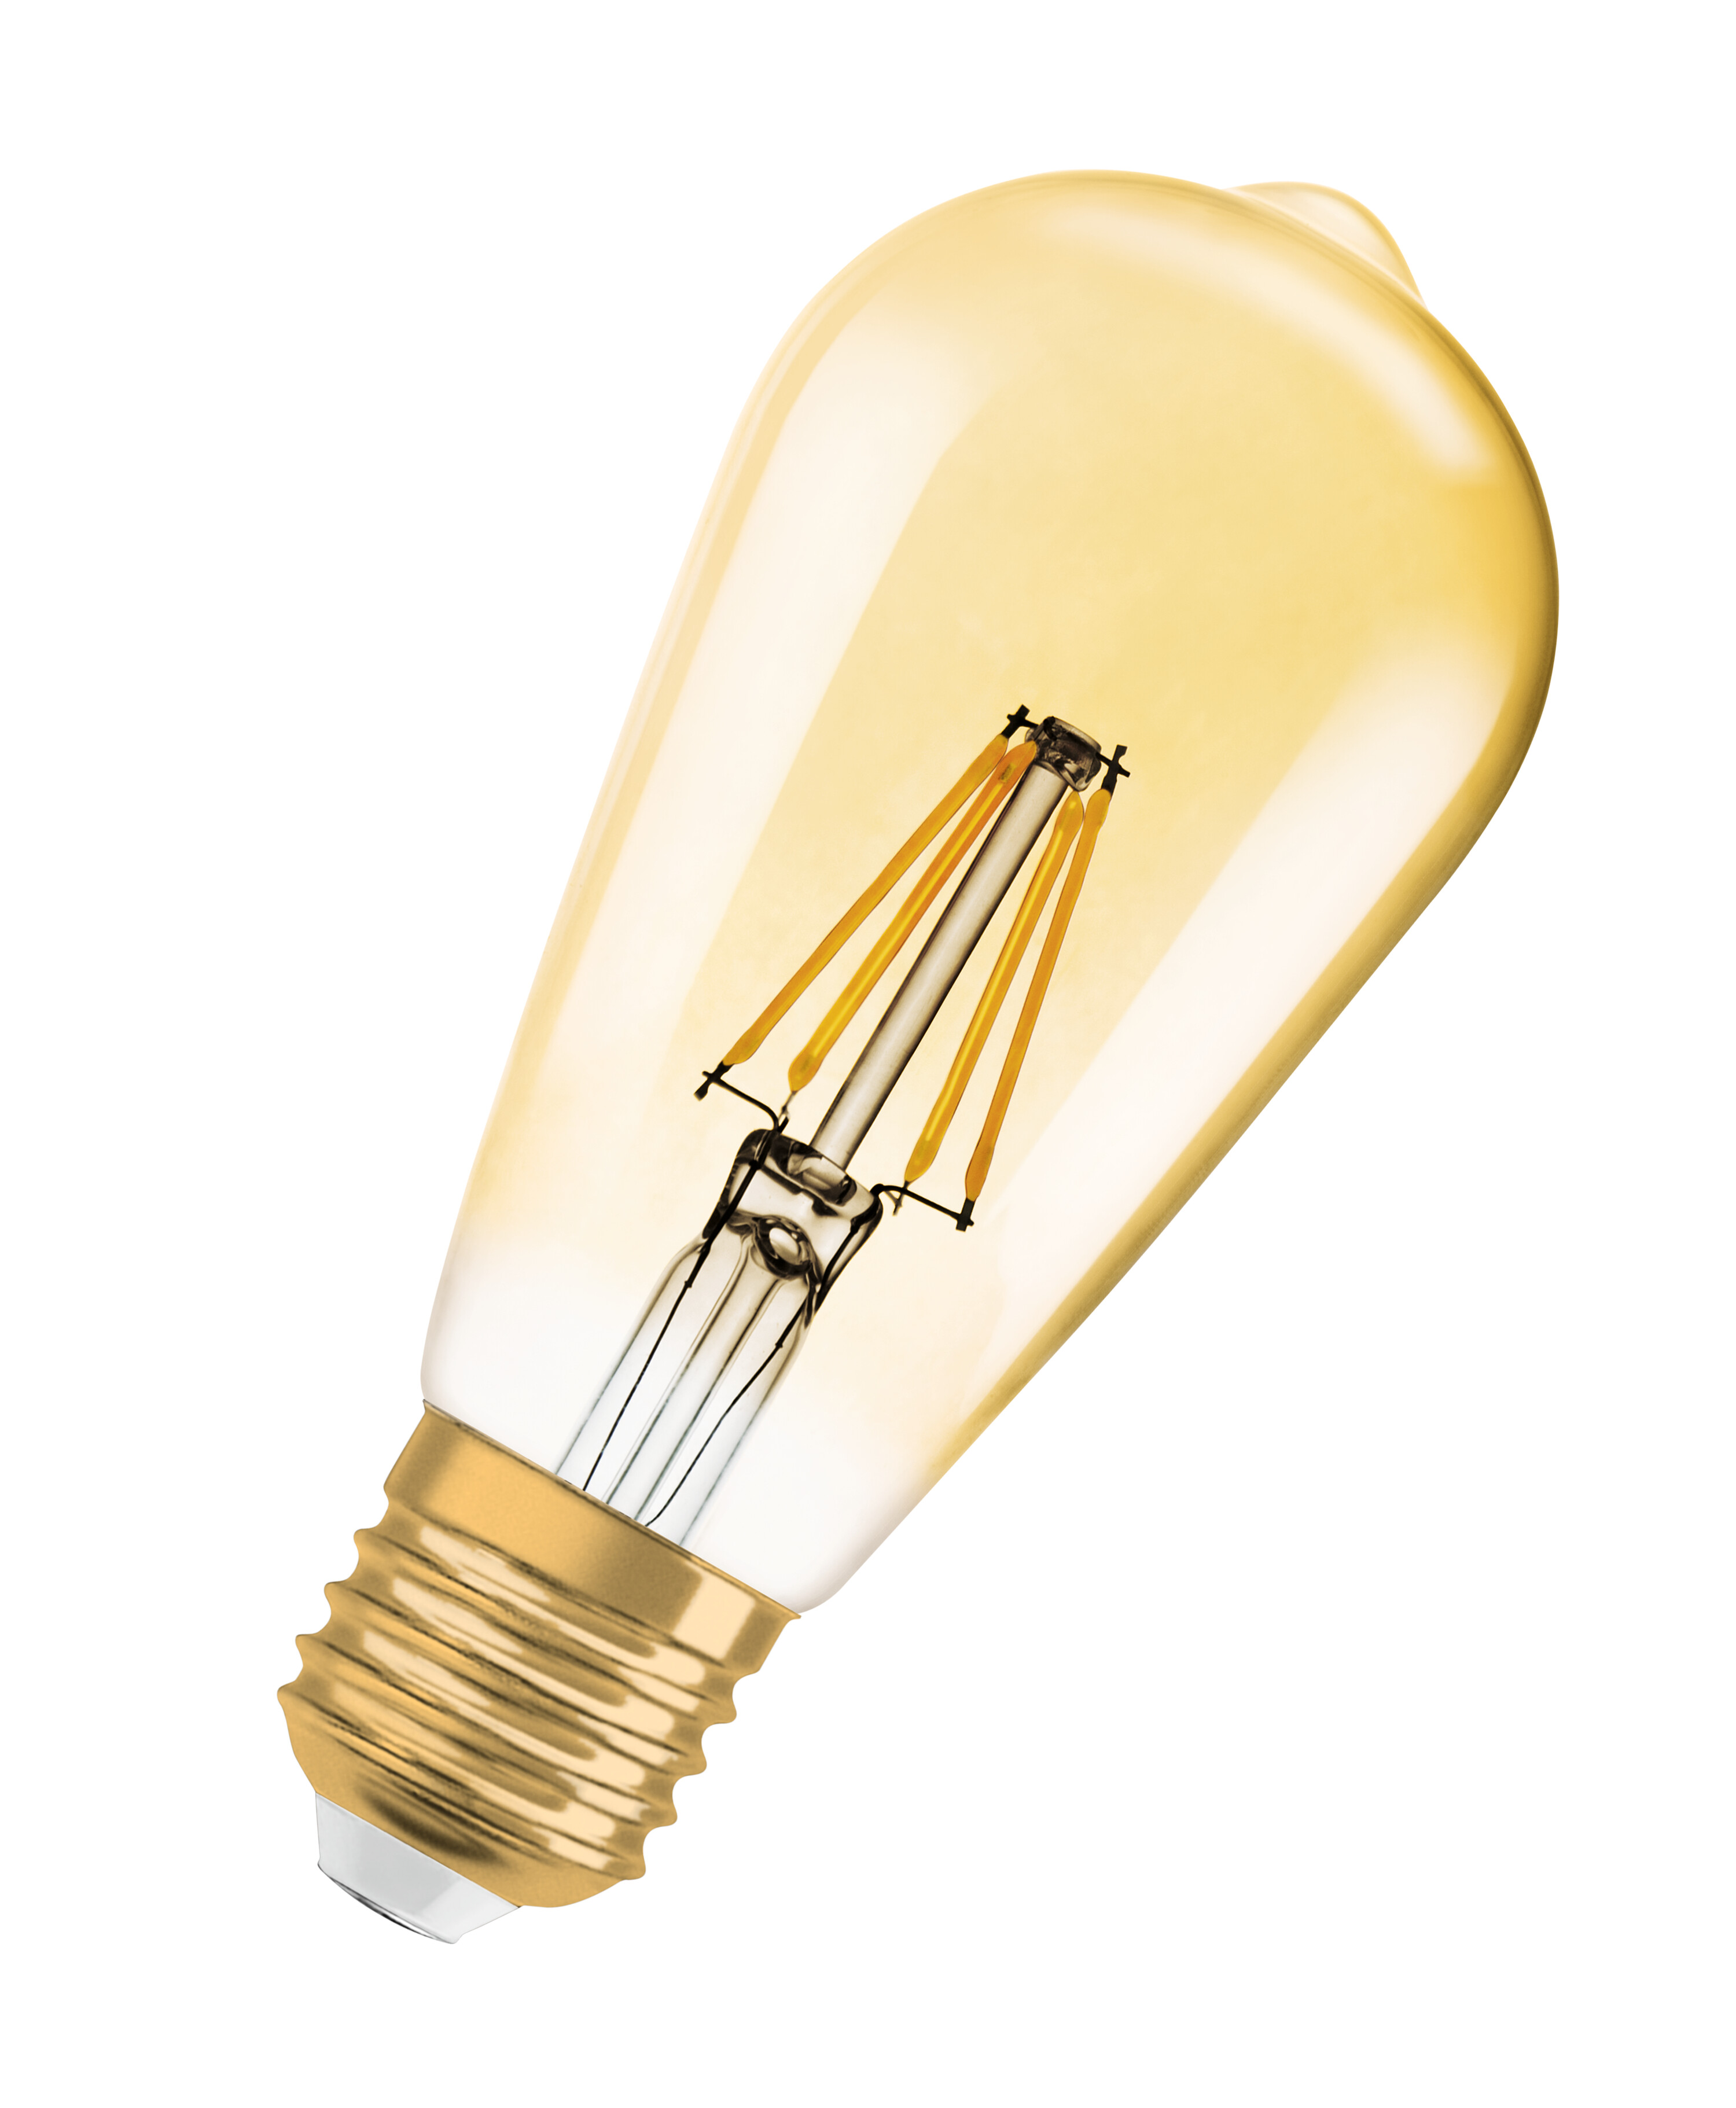 LED 1906 725 DIM Lampe LED Vintage Lumen Warmweiß OSRAM 